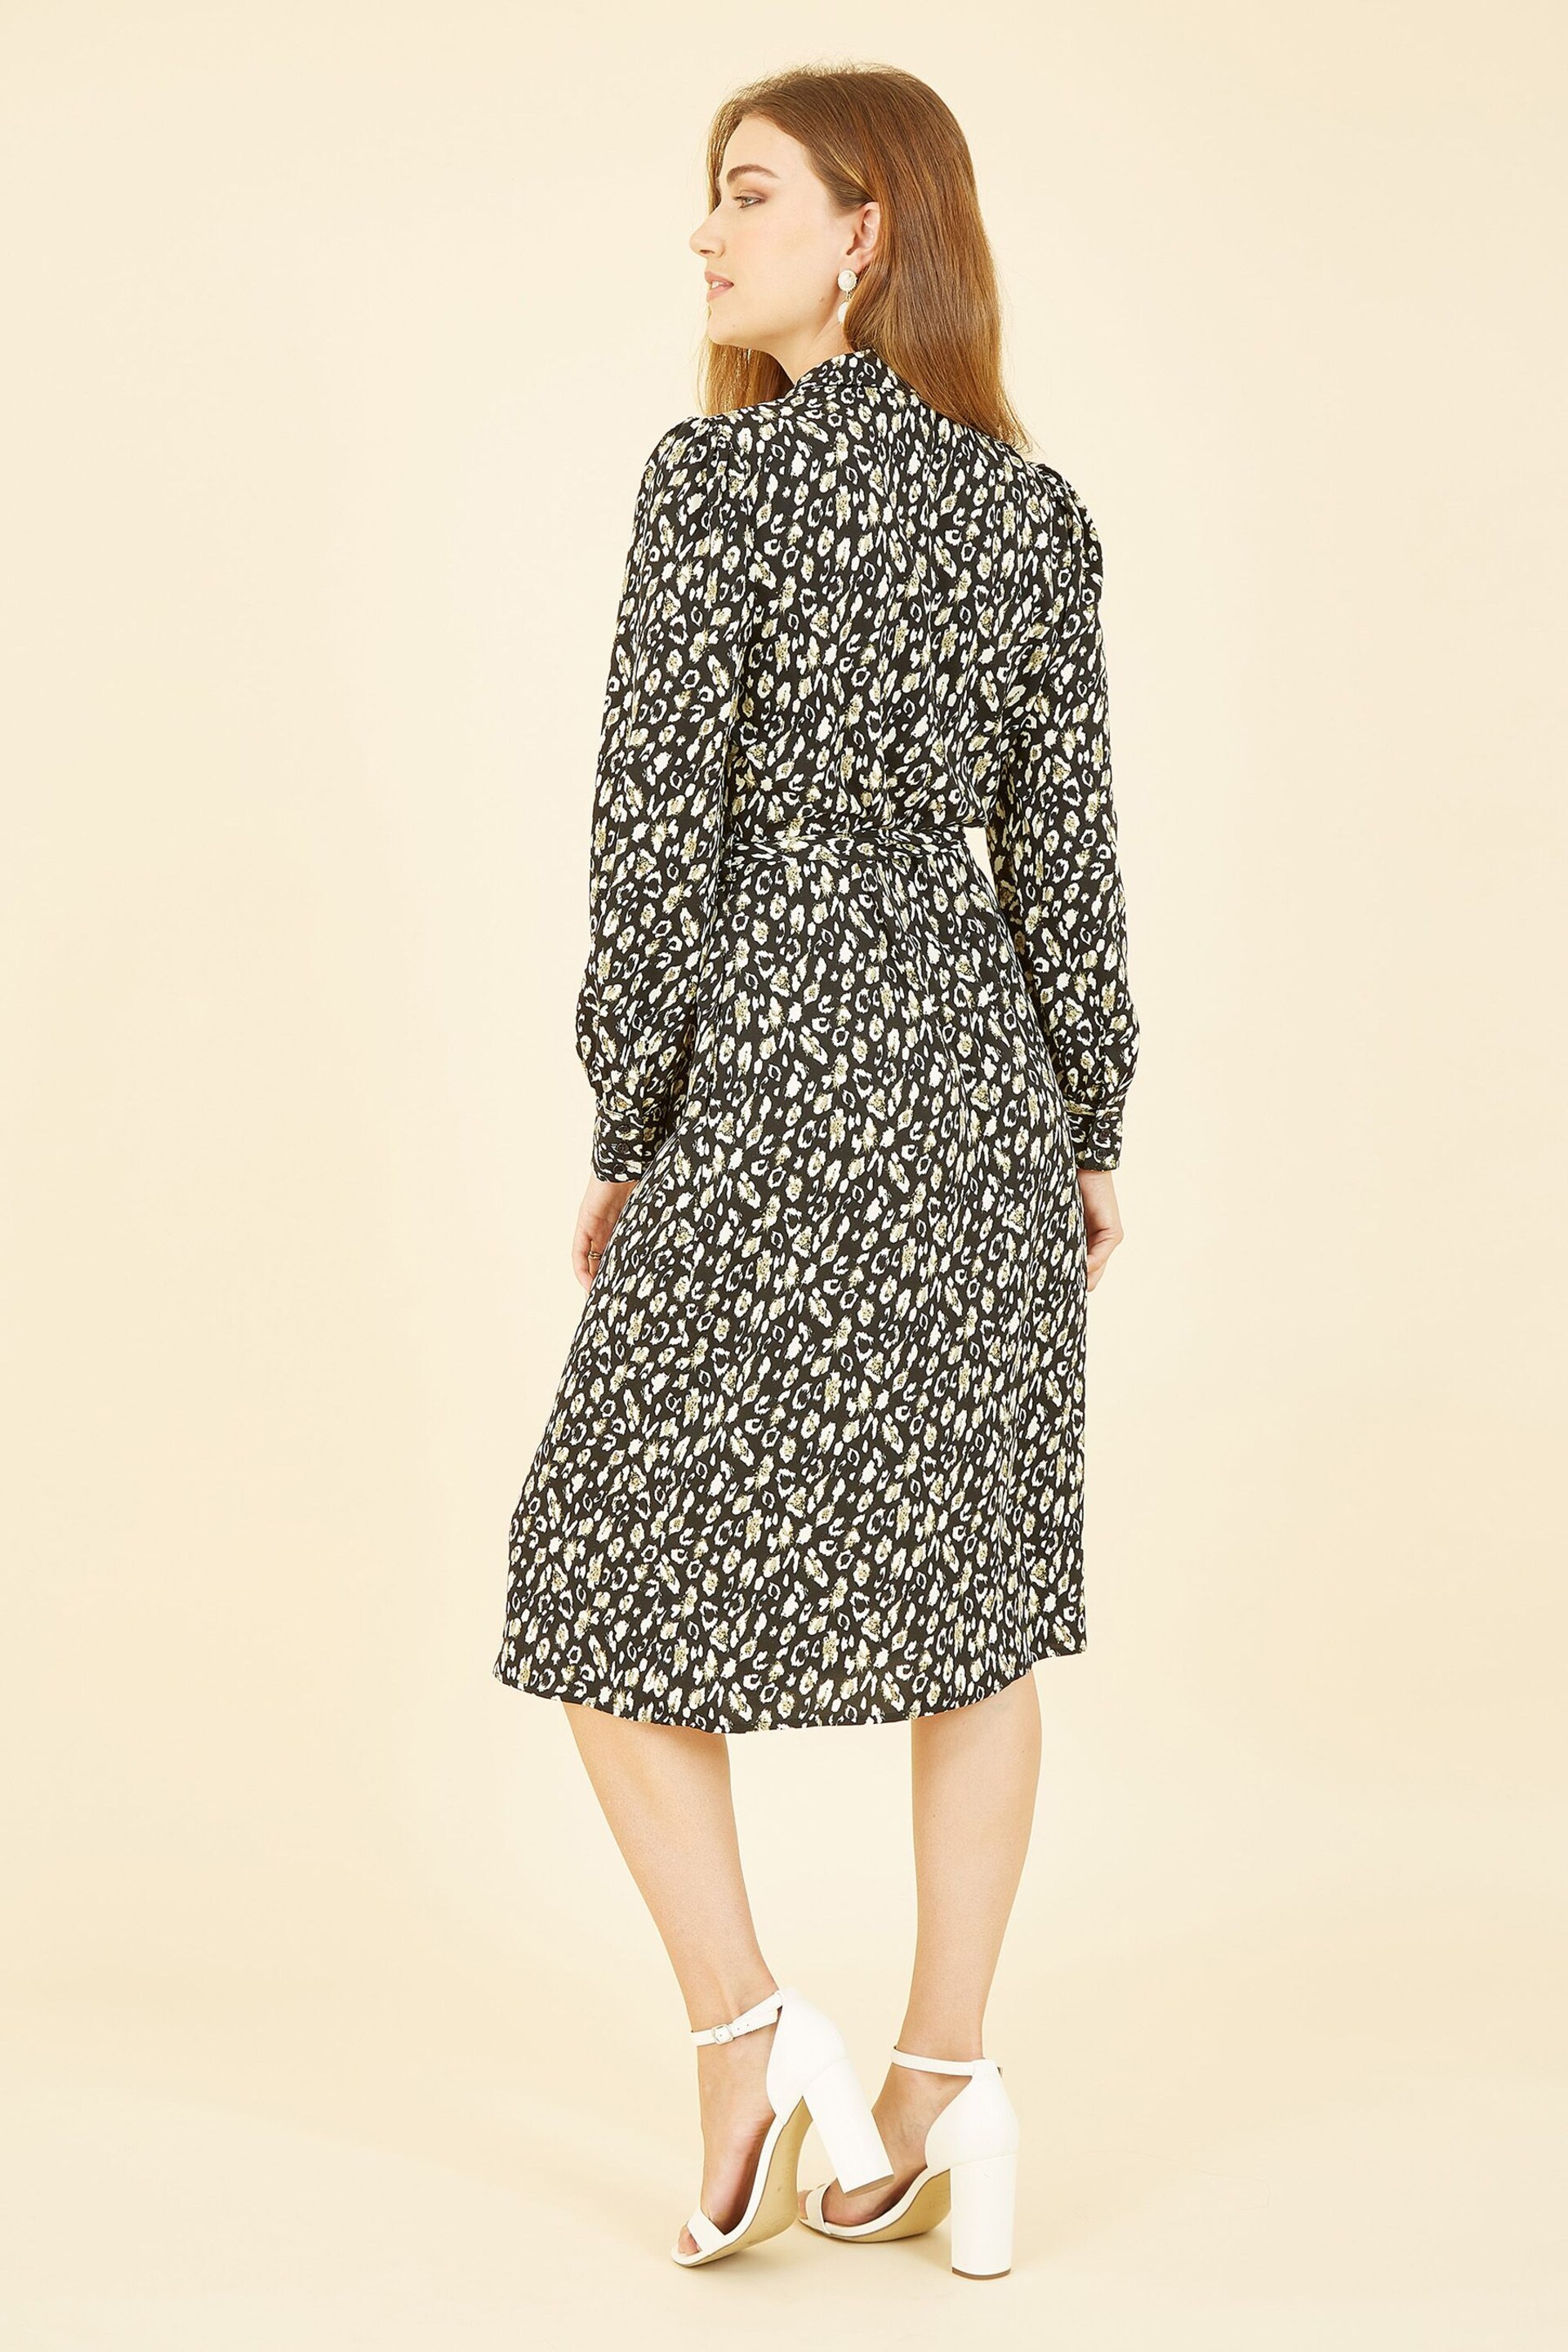 Yumi Black Leopard Print Shirt Dress - Image 4 of 5